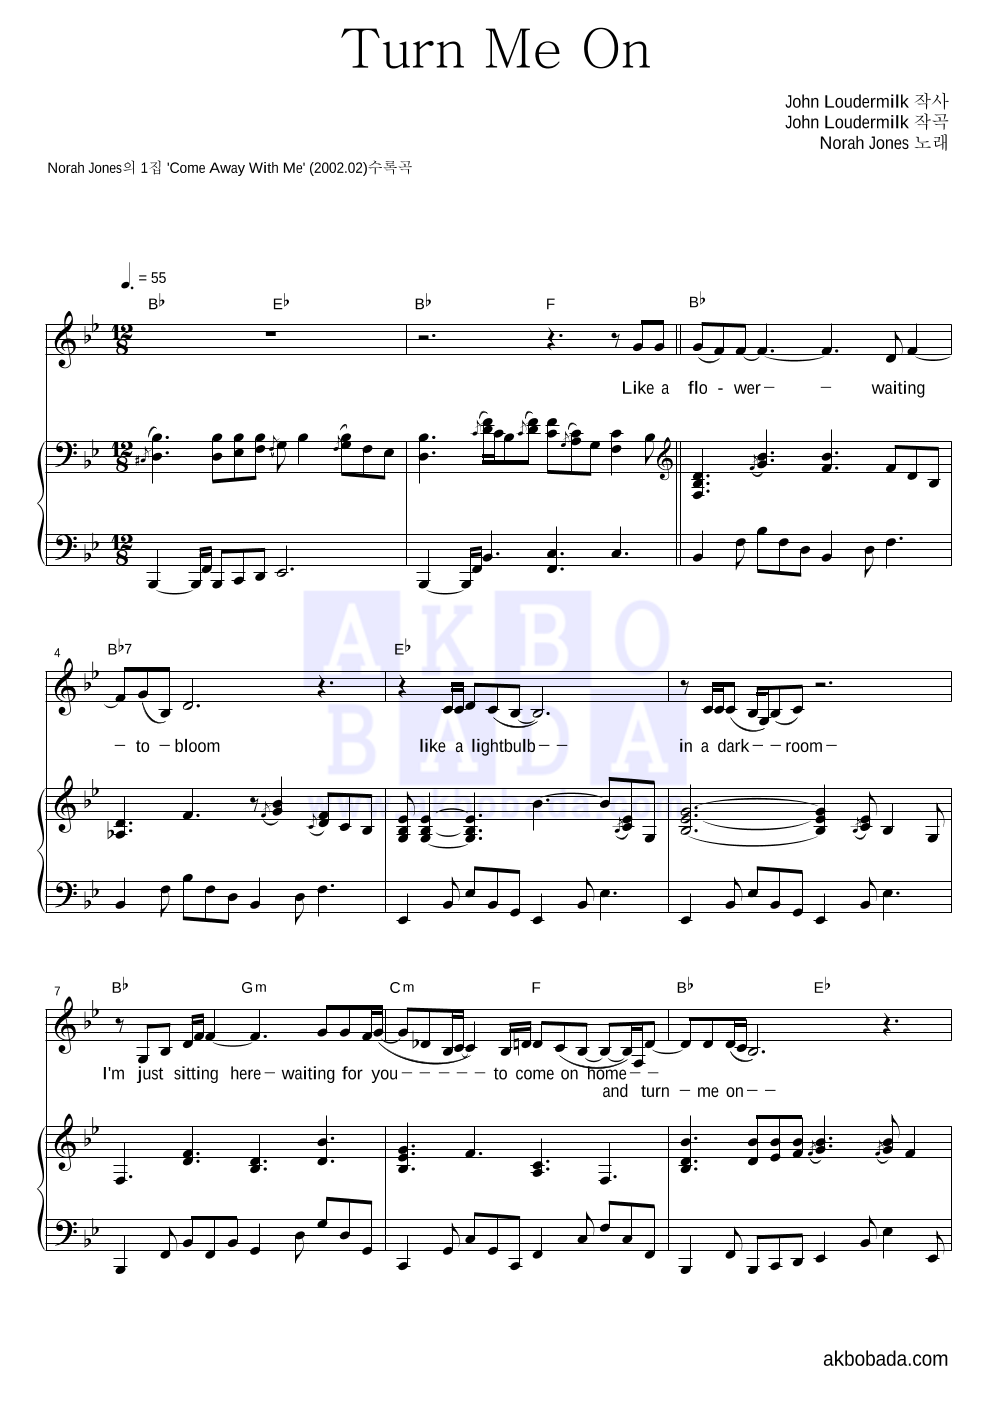 Norah Jones - Turn Me On 피아노 3단 악보 